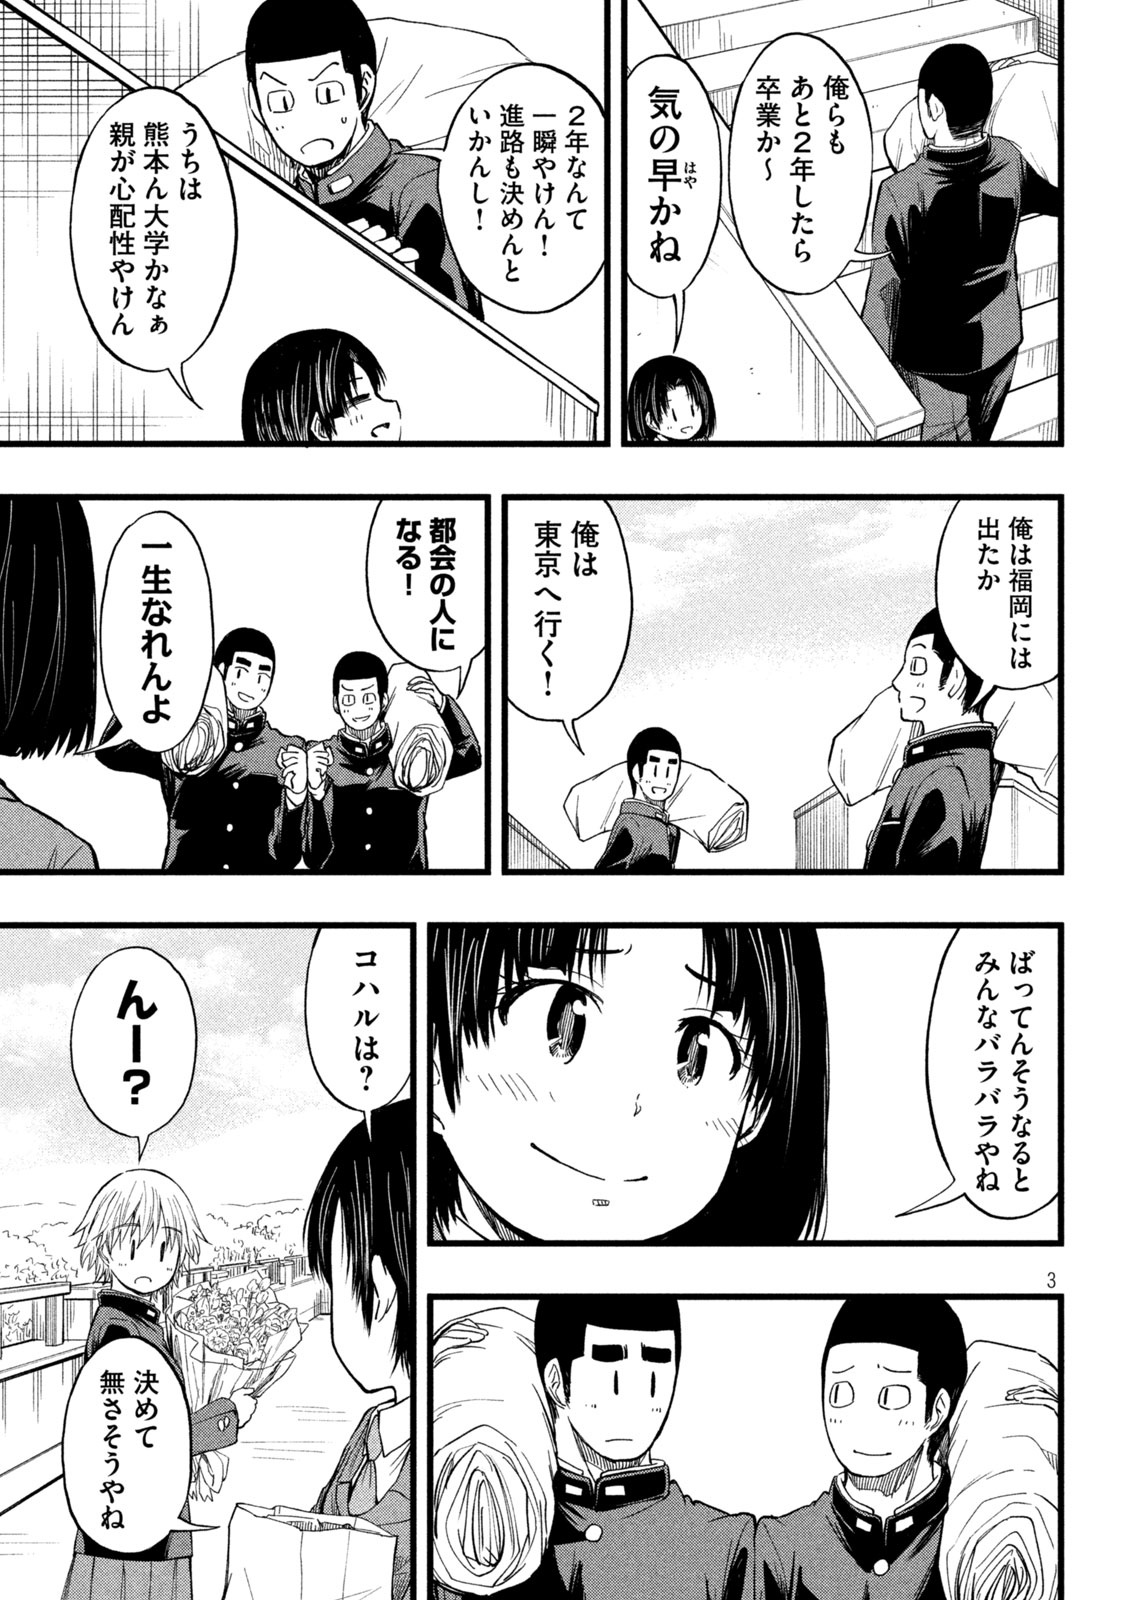 Koharu haru! - Chapter 89 - Page 3